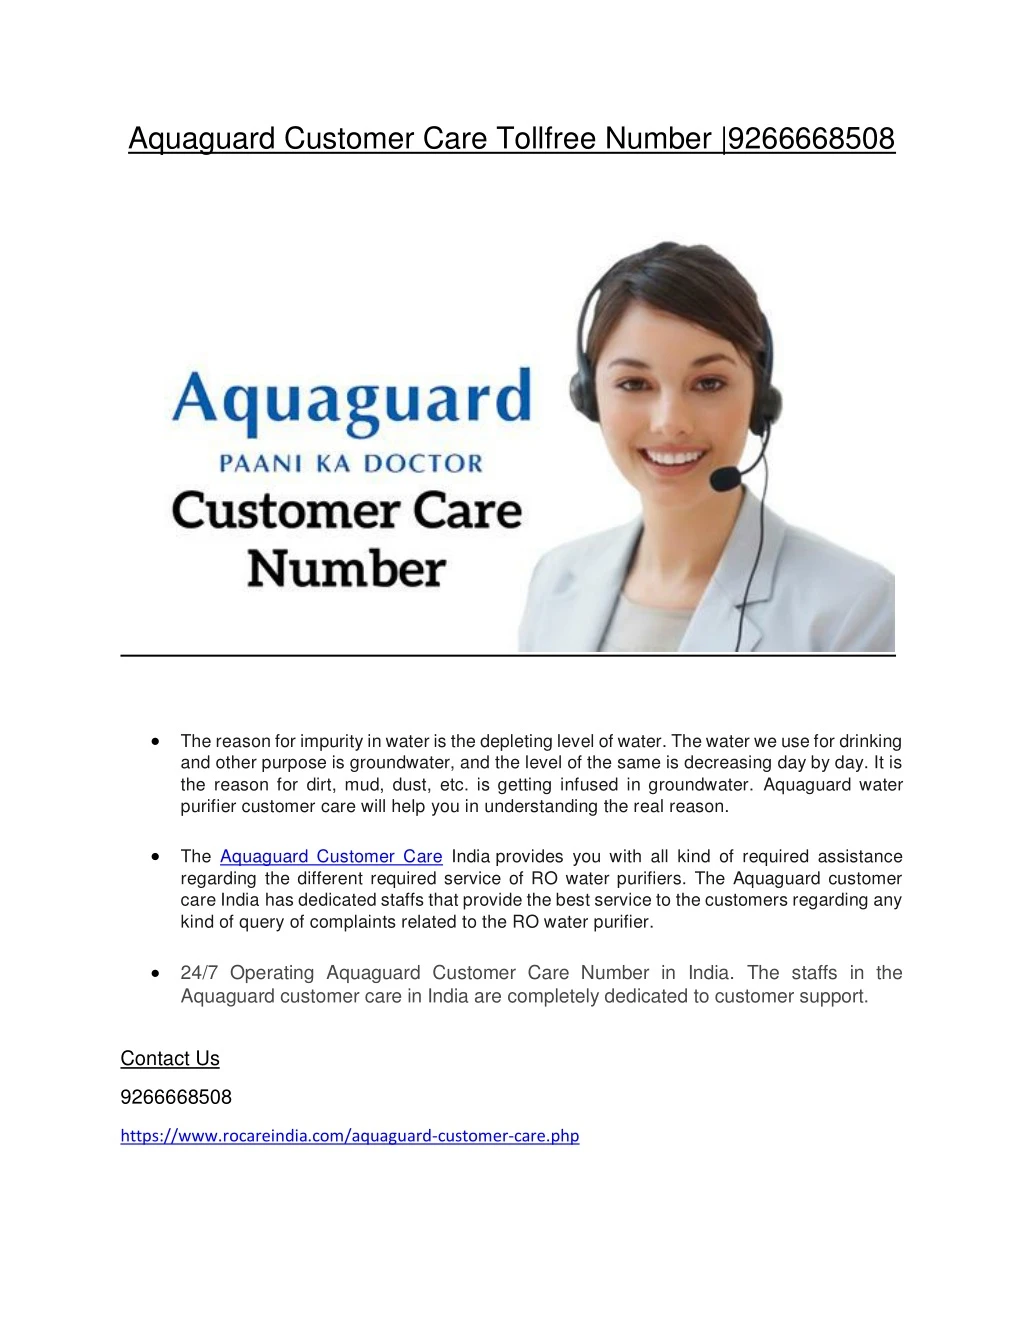 aquaguard customer care tollfree number 9266668508